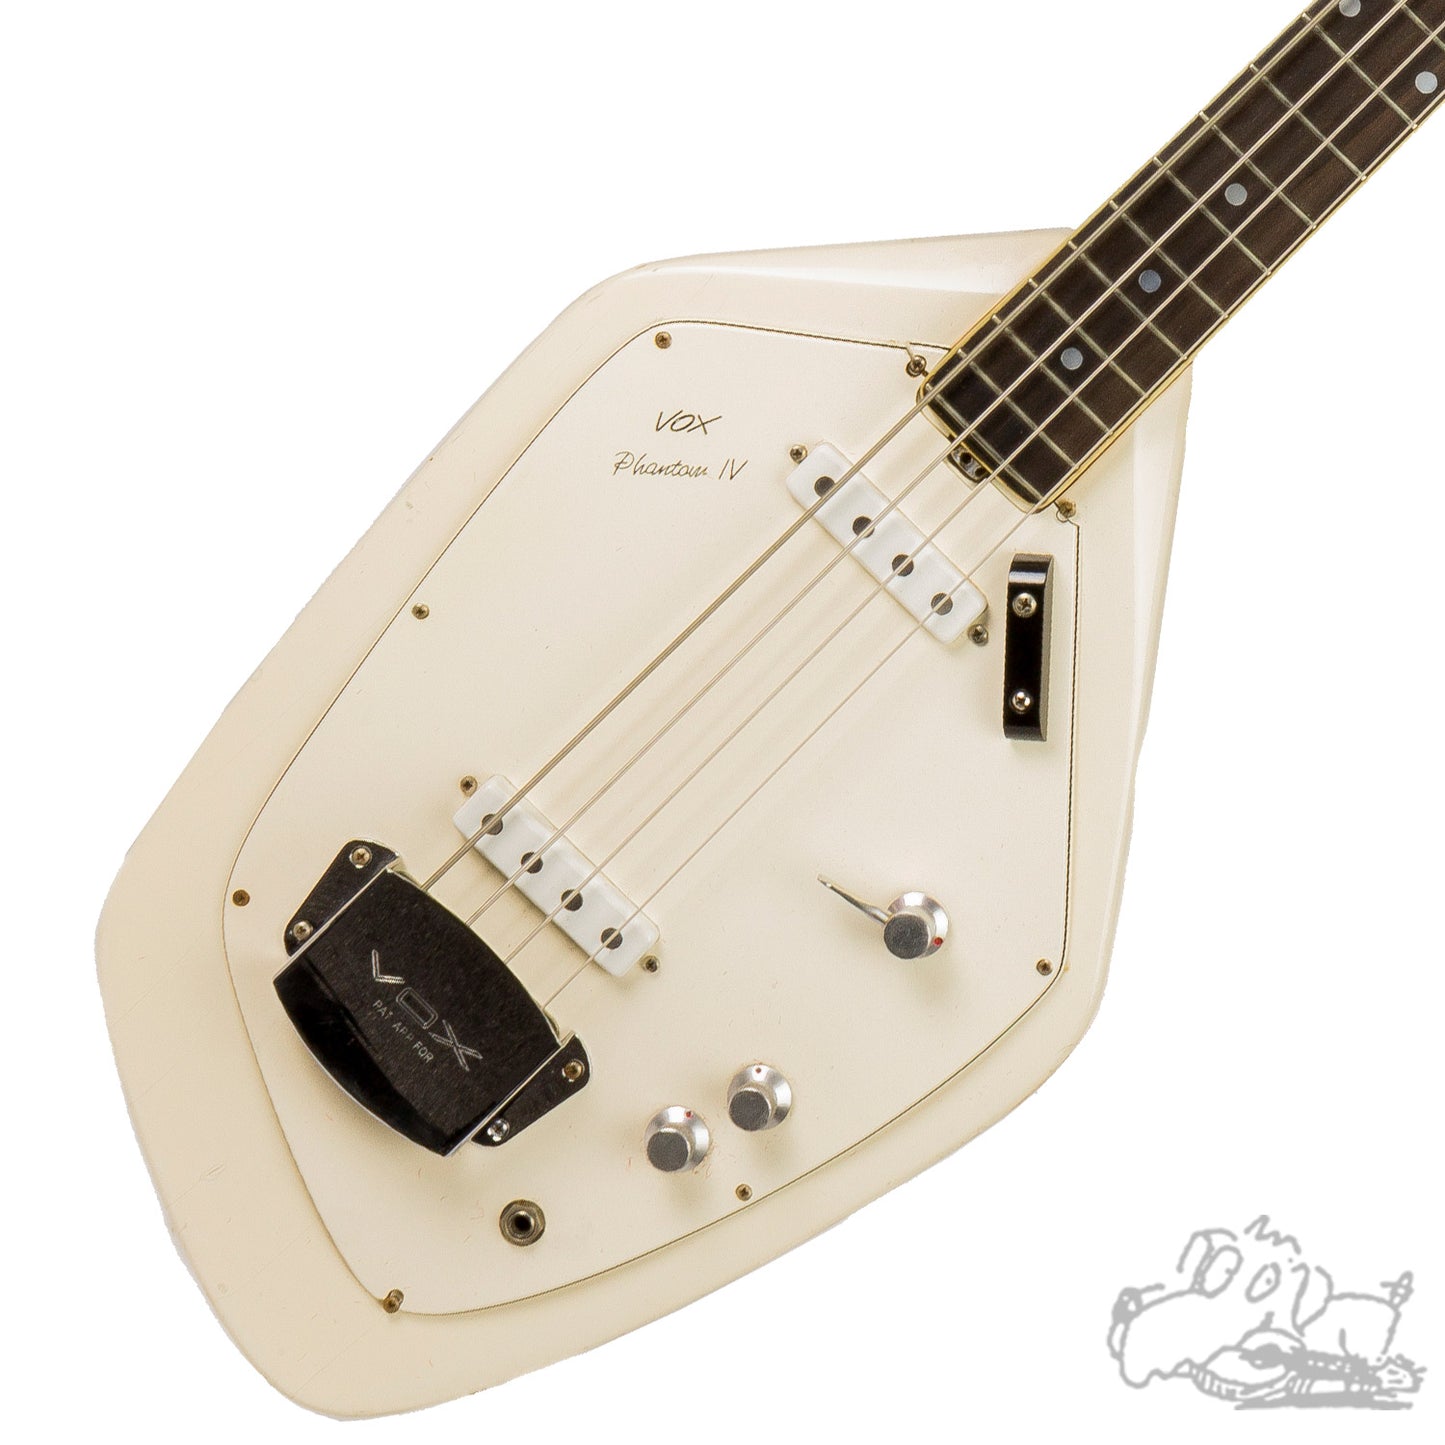 1970's Vox Phantom IV Bass